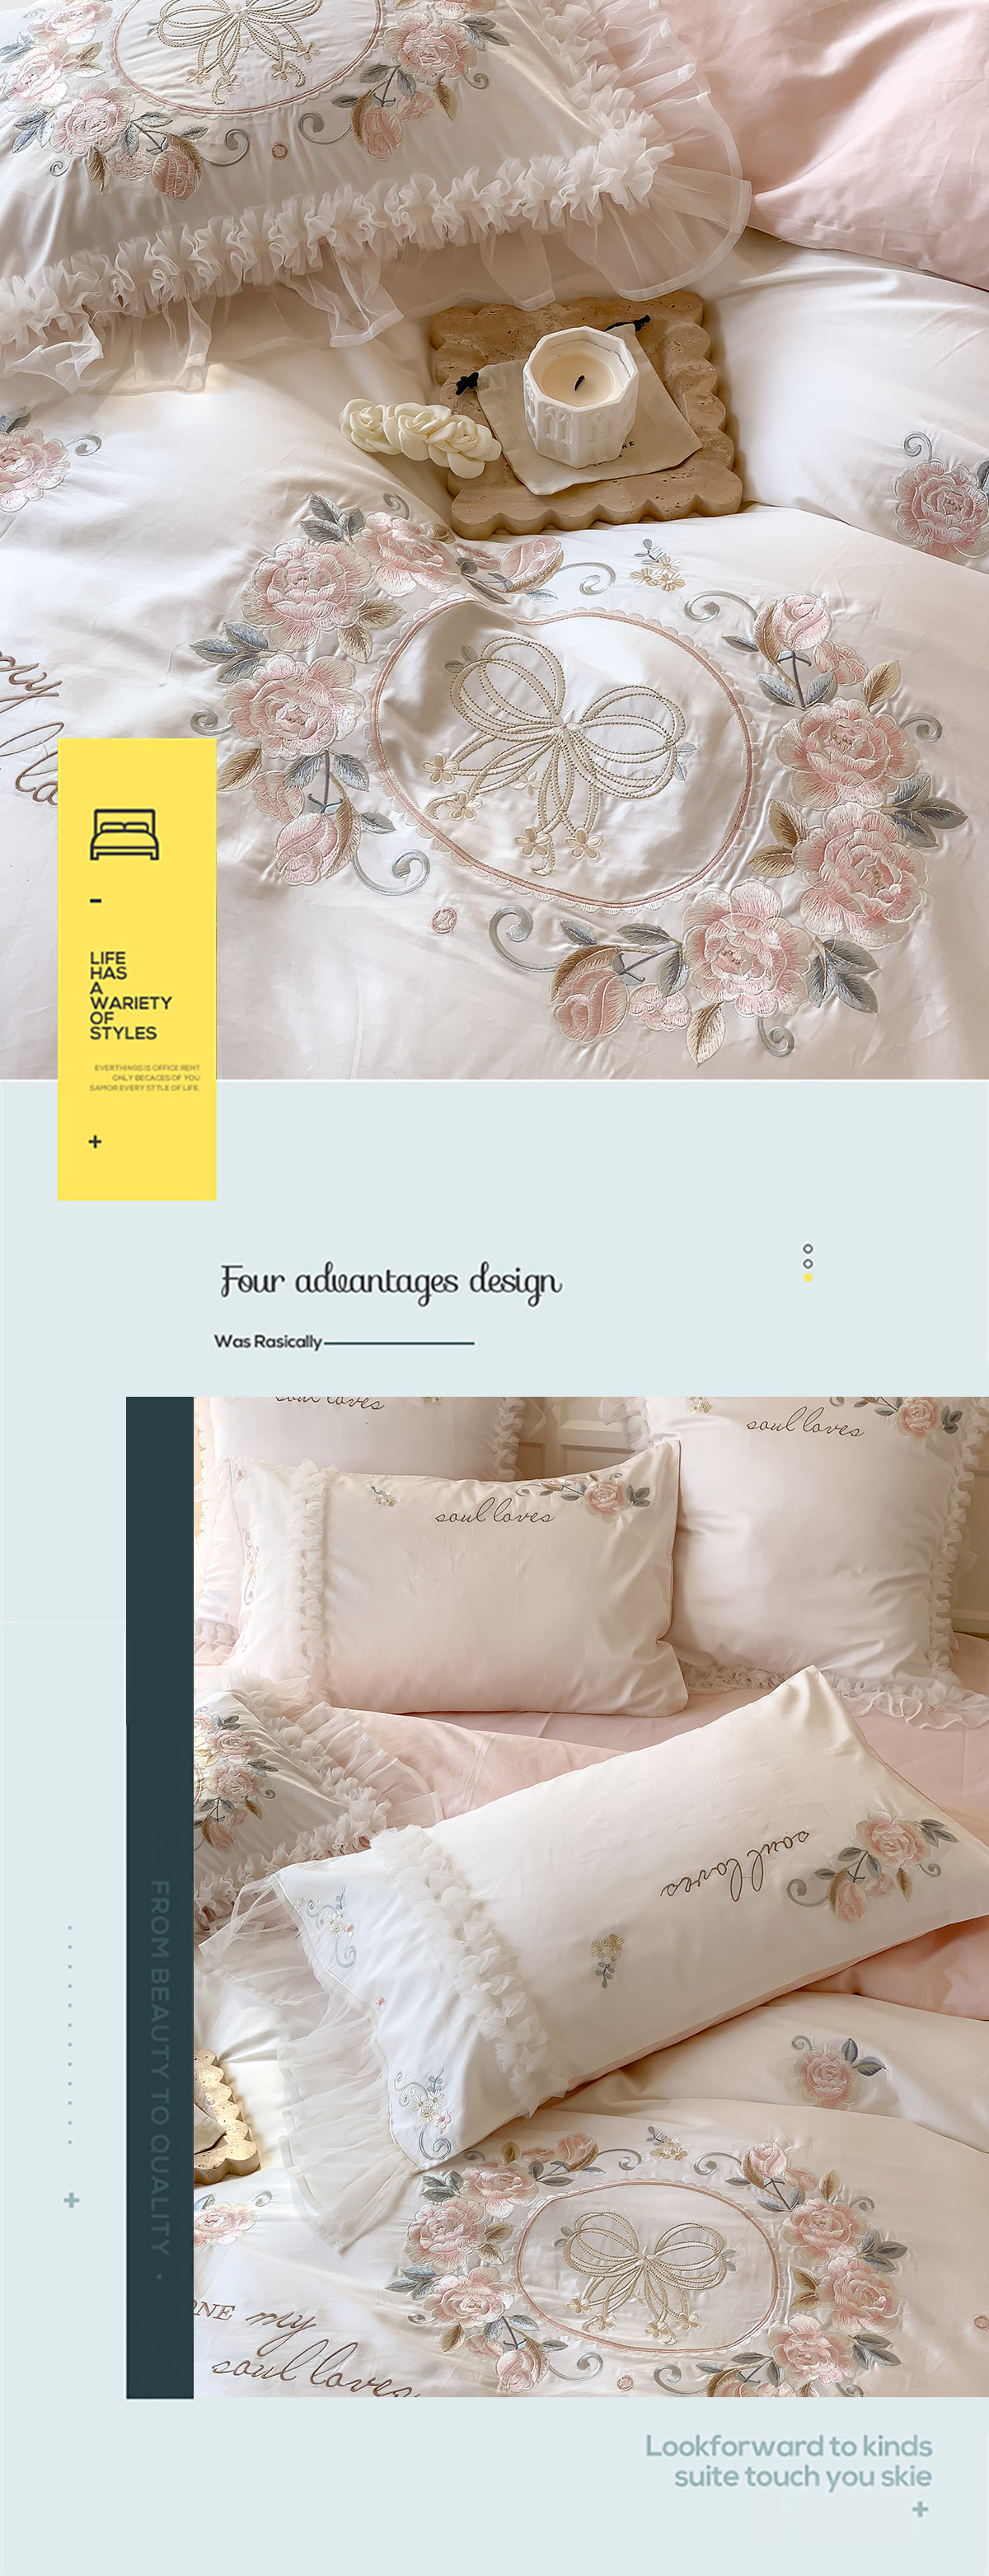 Aesthetic Embroidery Ruffle Duvet Cover Princess Bedding 4 Pcs Set09